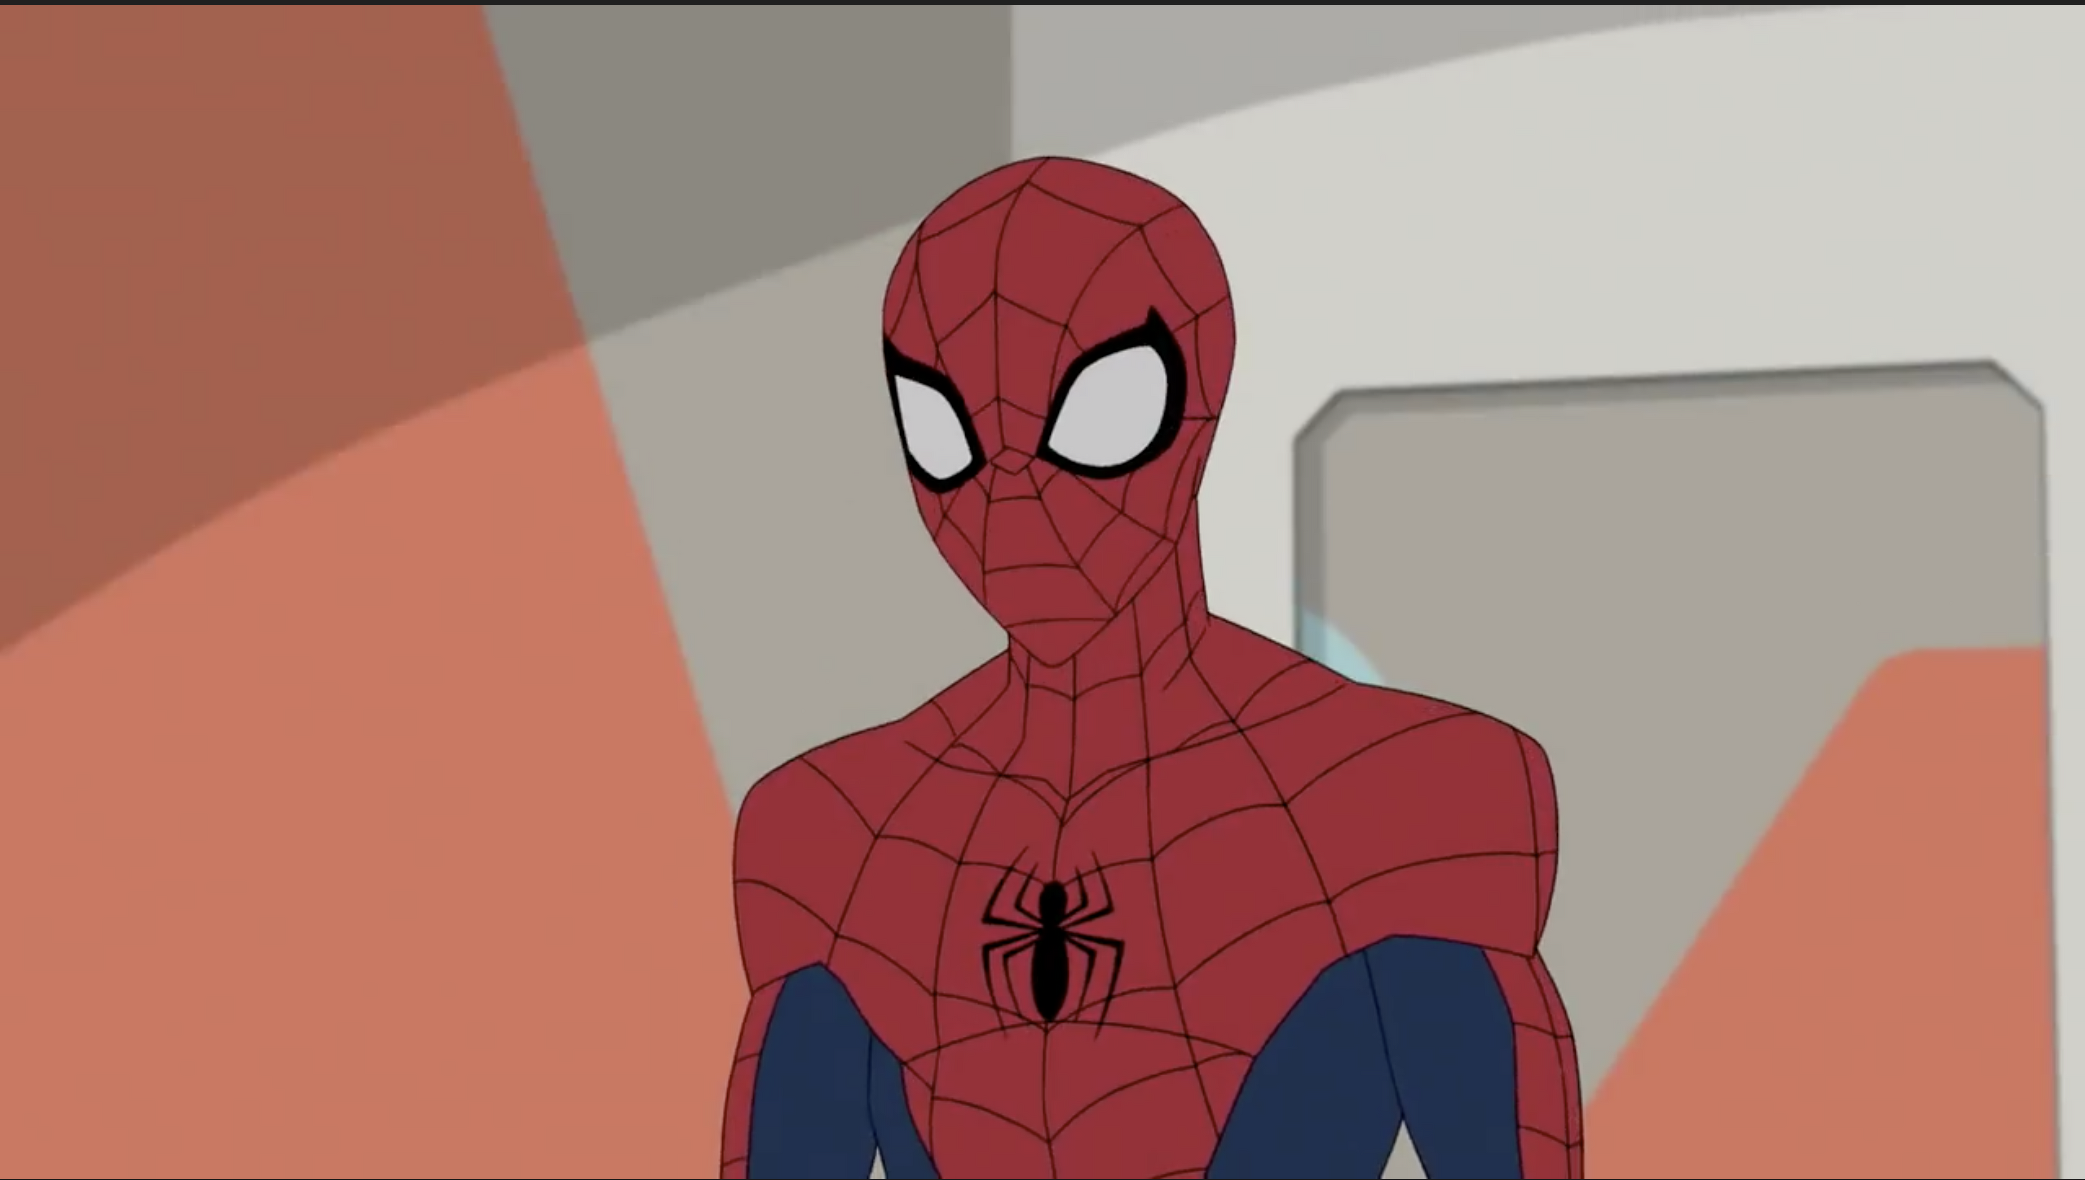 Spider-Man (2017 TV series) - Wikipedia